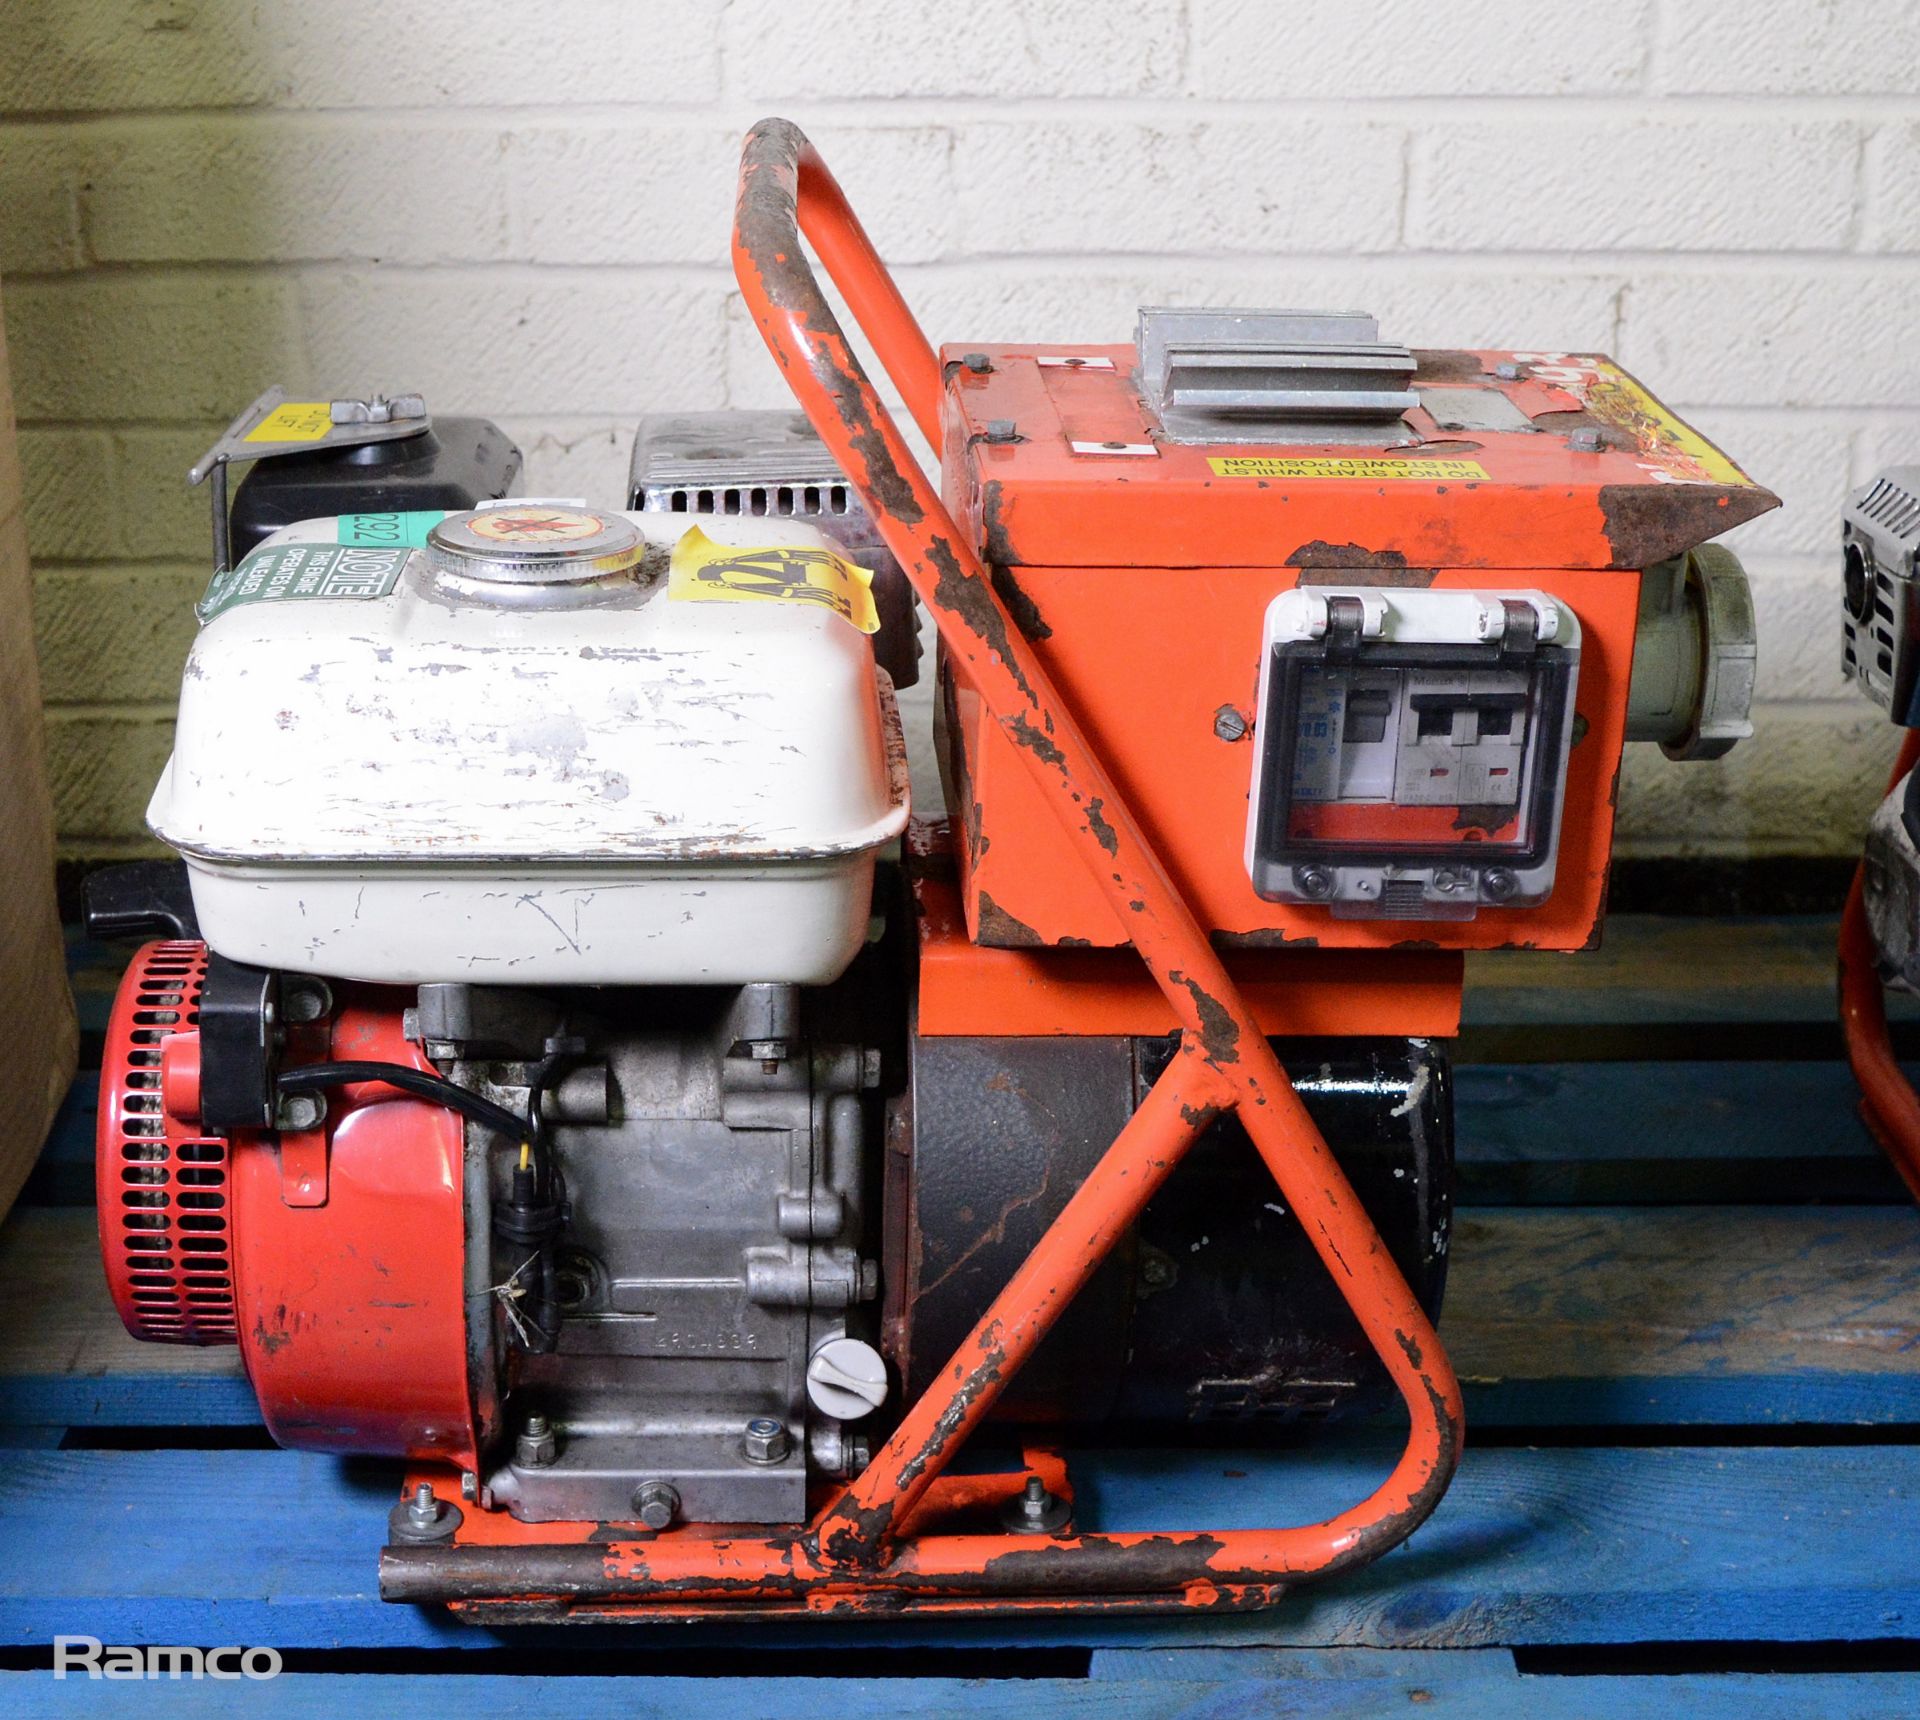 Honda petrol driven generator - 1.5KVA - 110V 50hz 13.6amps - Image 2 of 6